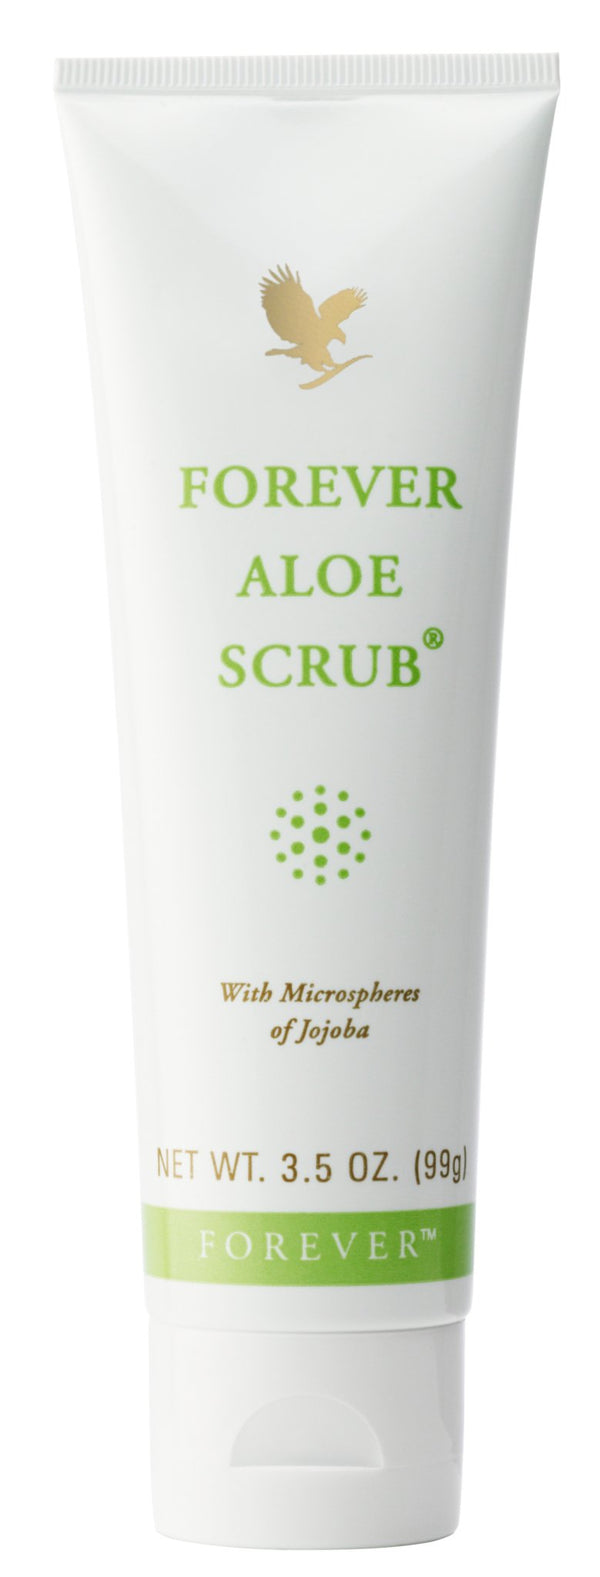 Forever Aloe Scrub - Peelingcreme mit Aloe Vera und Jojoba - Mana Kendra GmbH